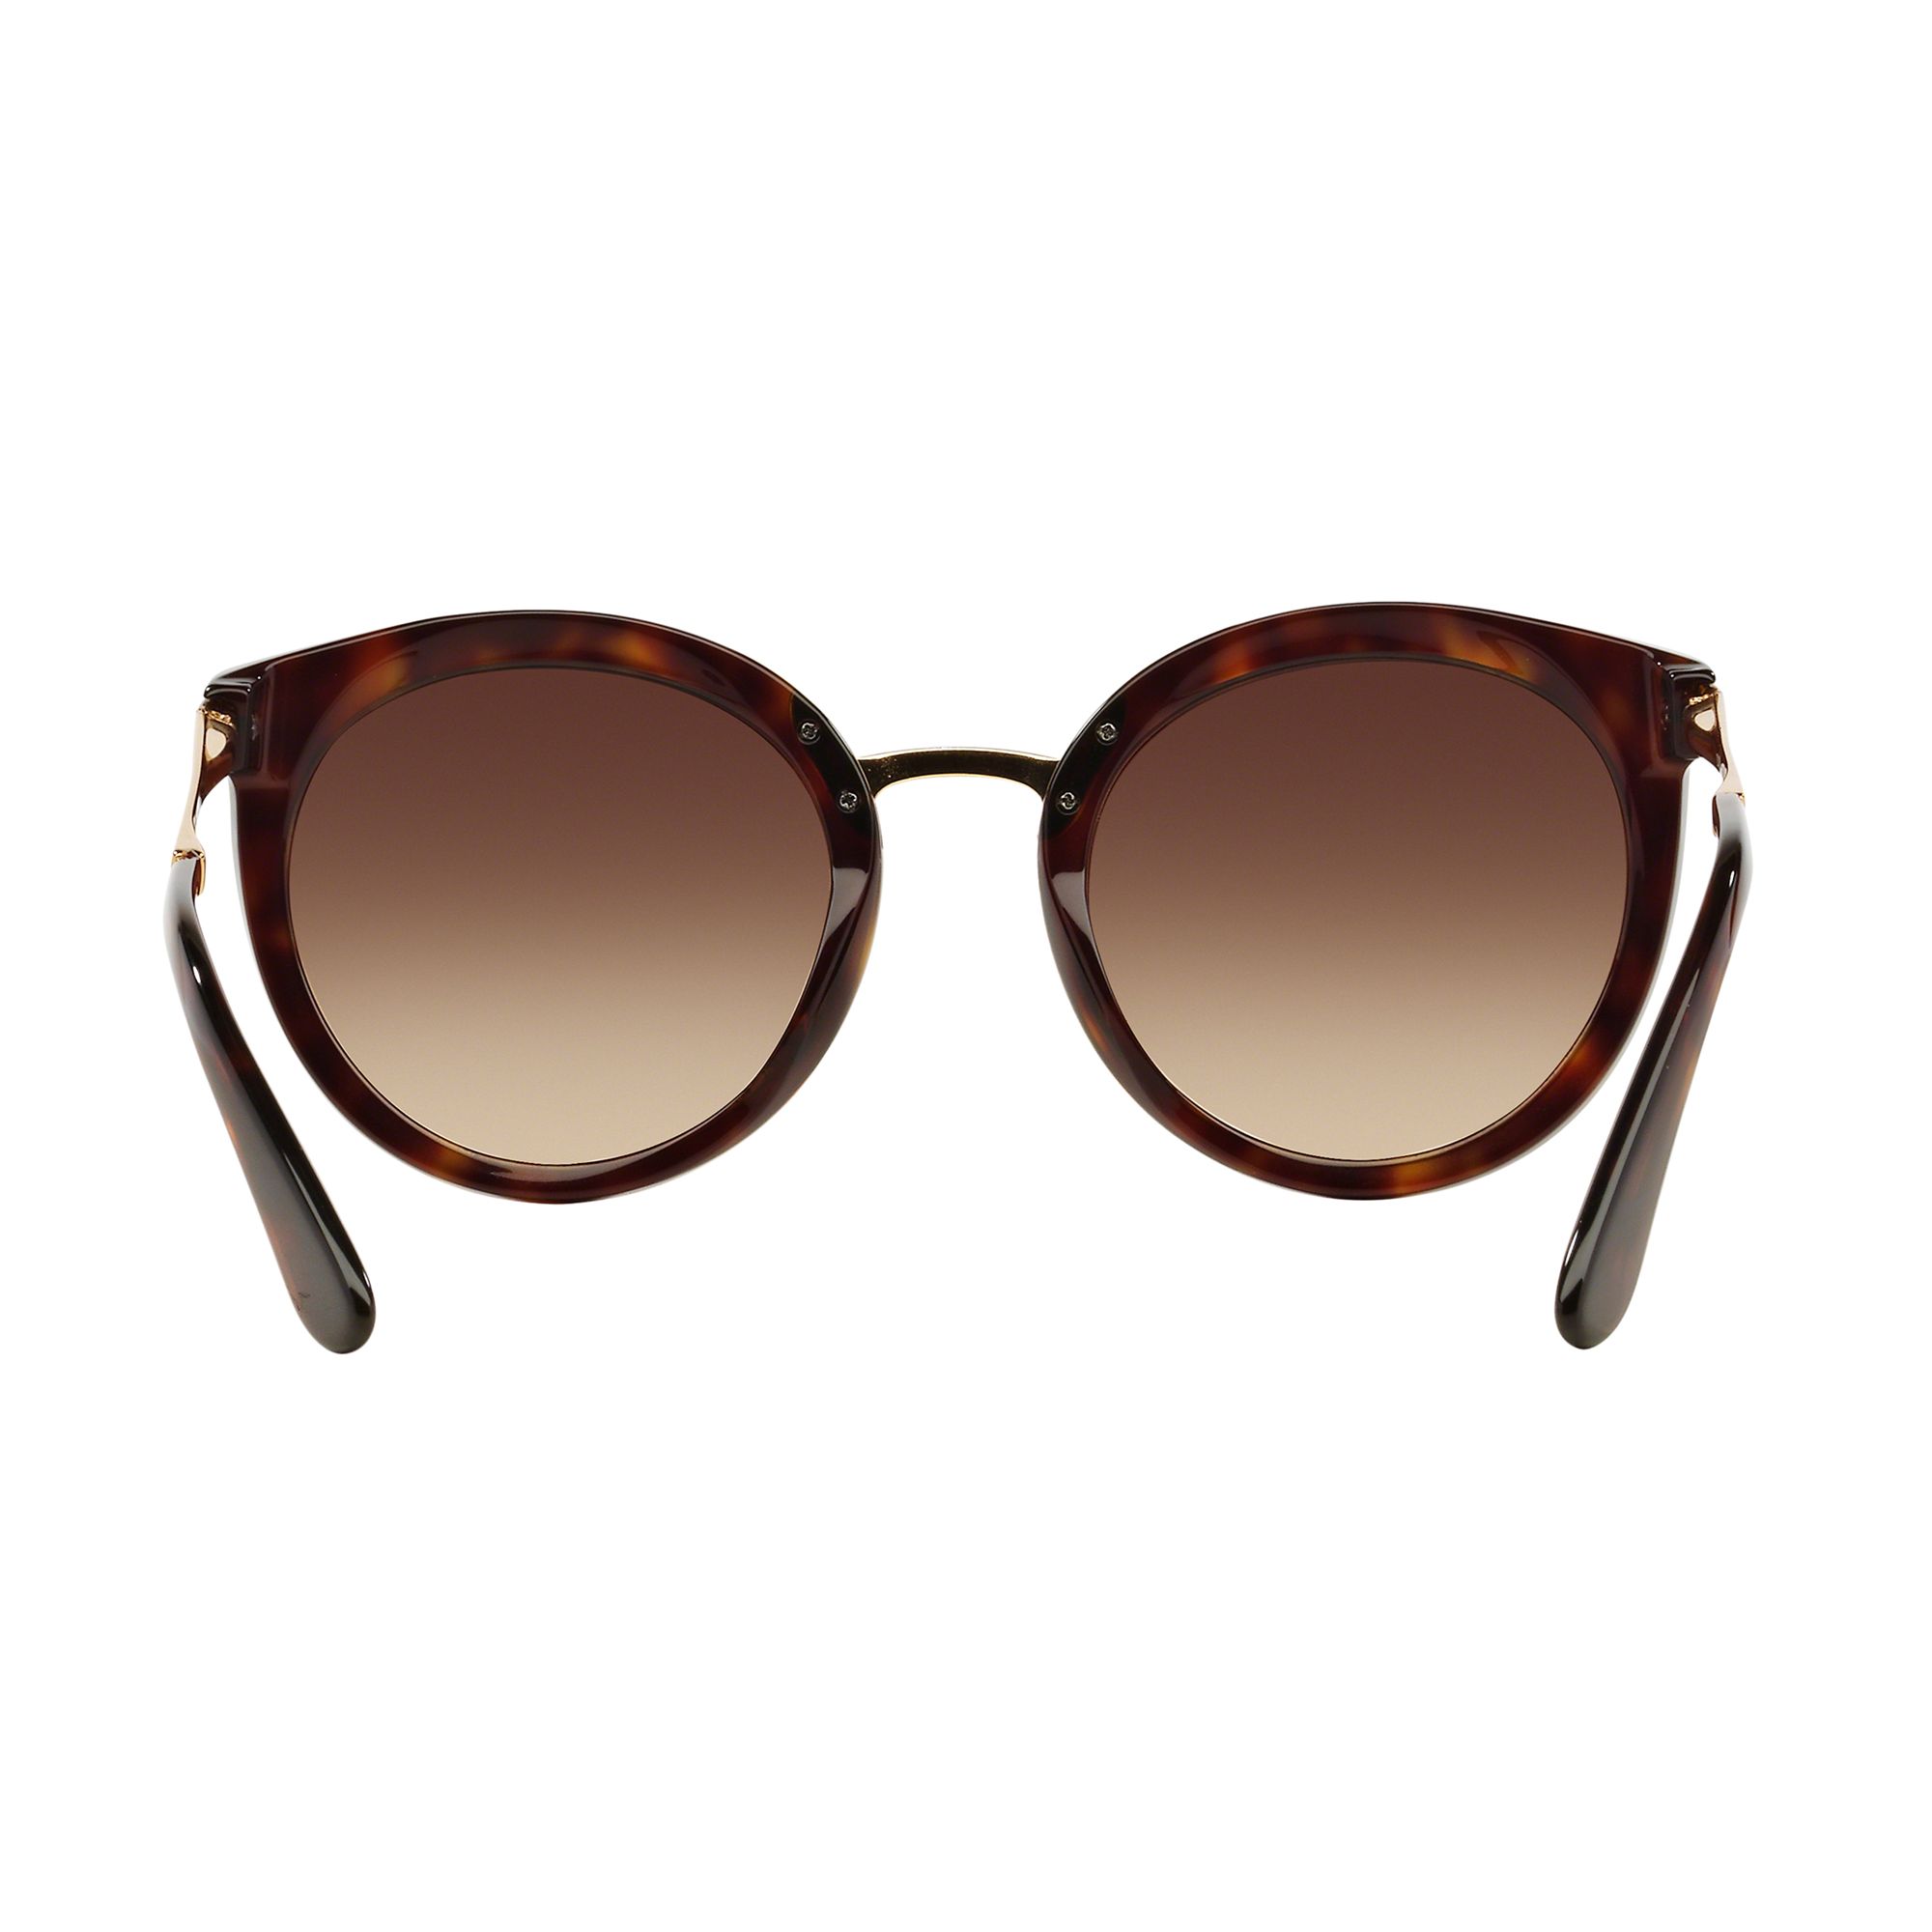 Dolce & Gabbana DG4268 Round Sunglasses, Tortoise at John Lewis & Partners